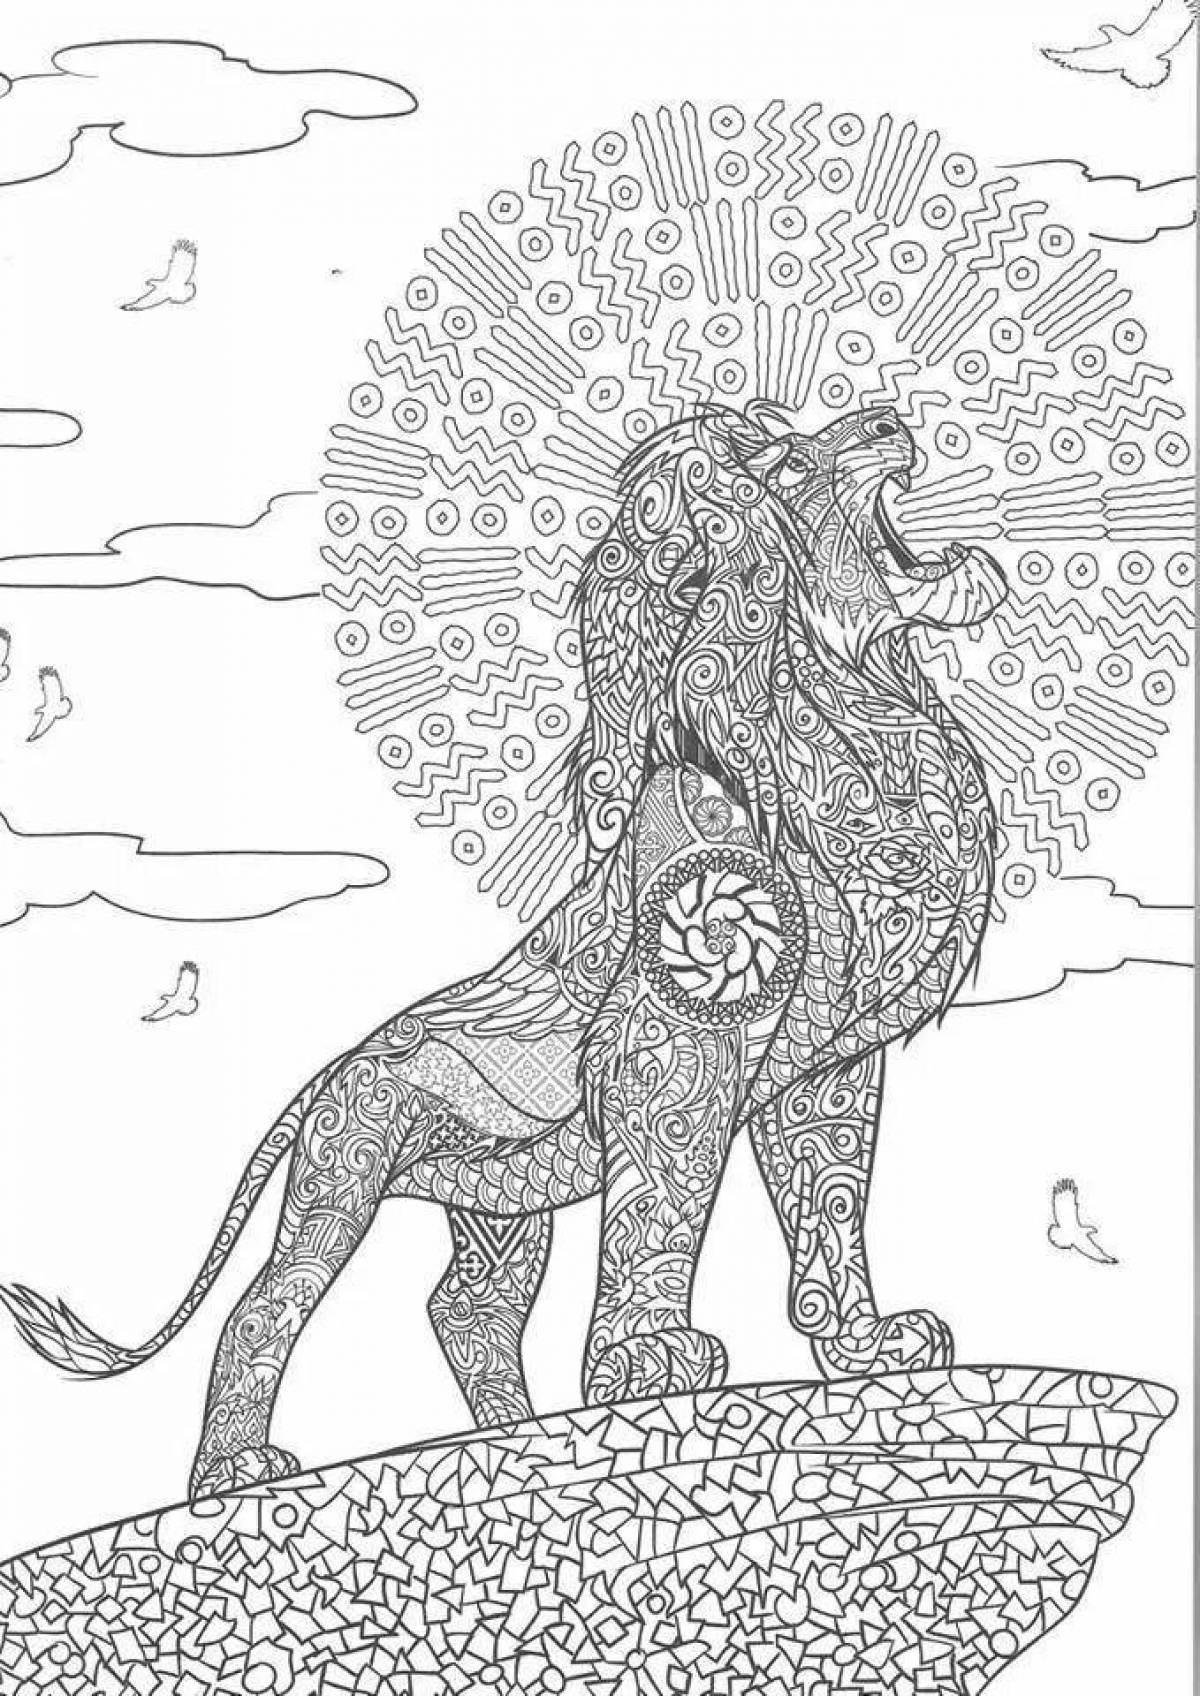 Charming lion complex coloring book